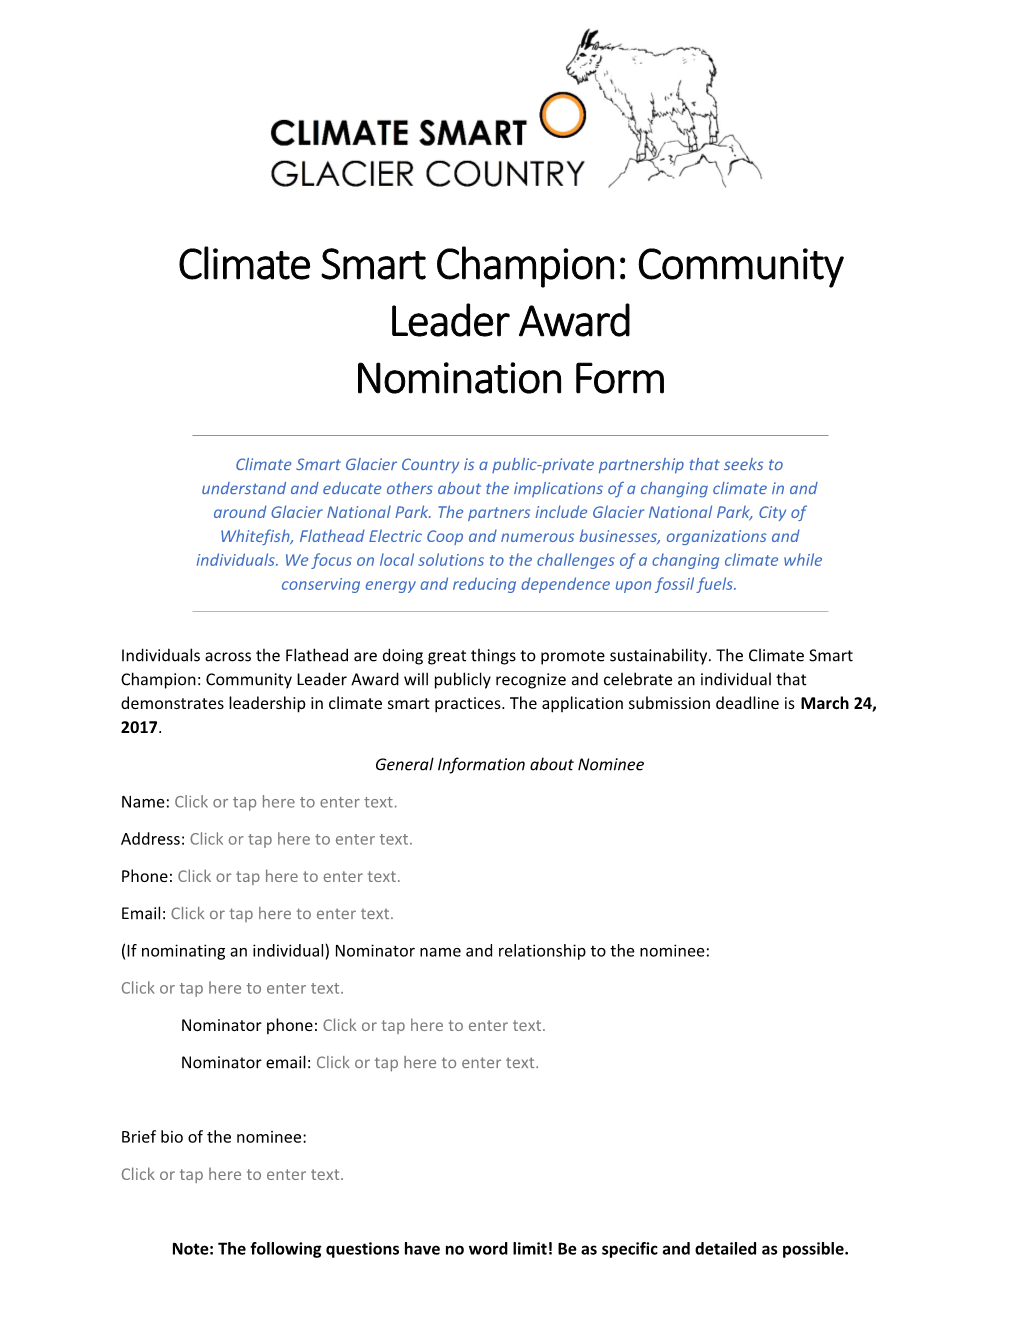 Climate Smart Champion: Community Leader Award